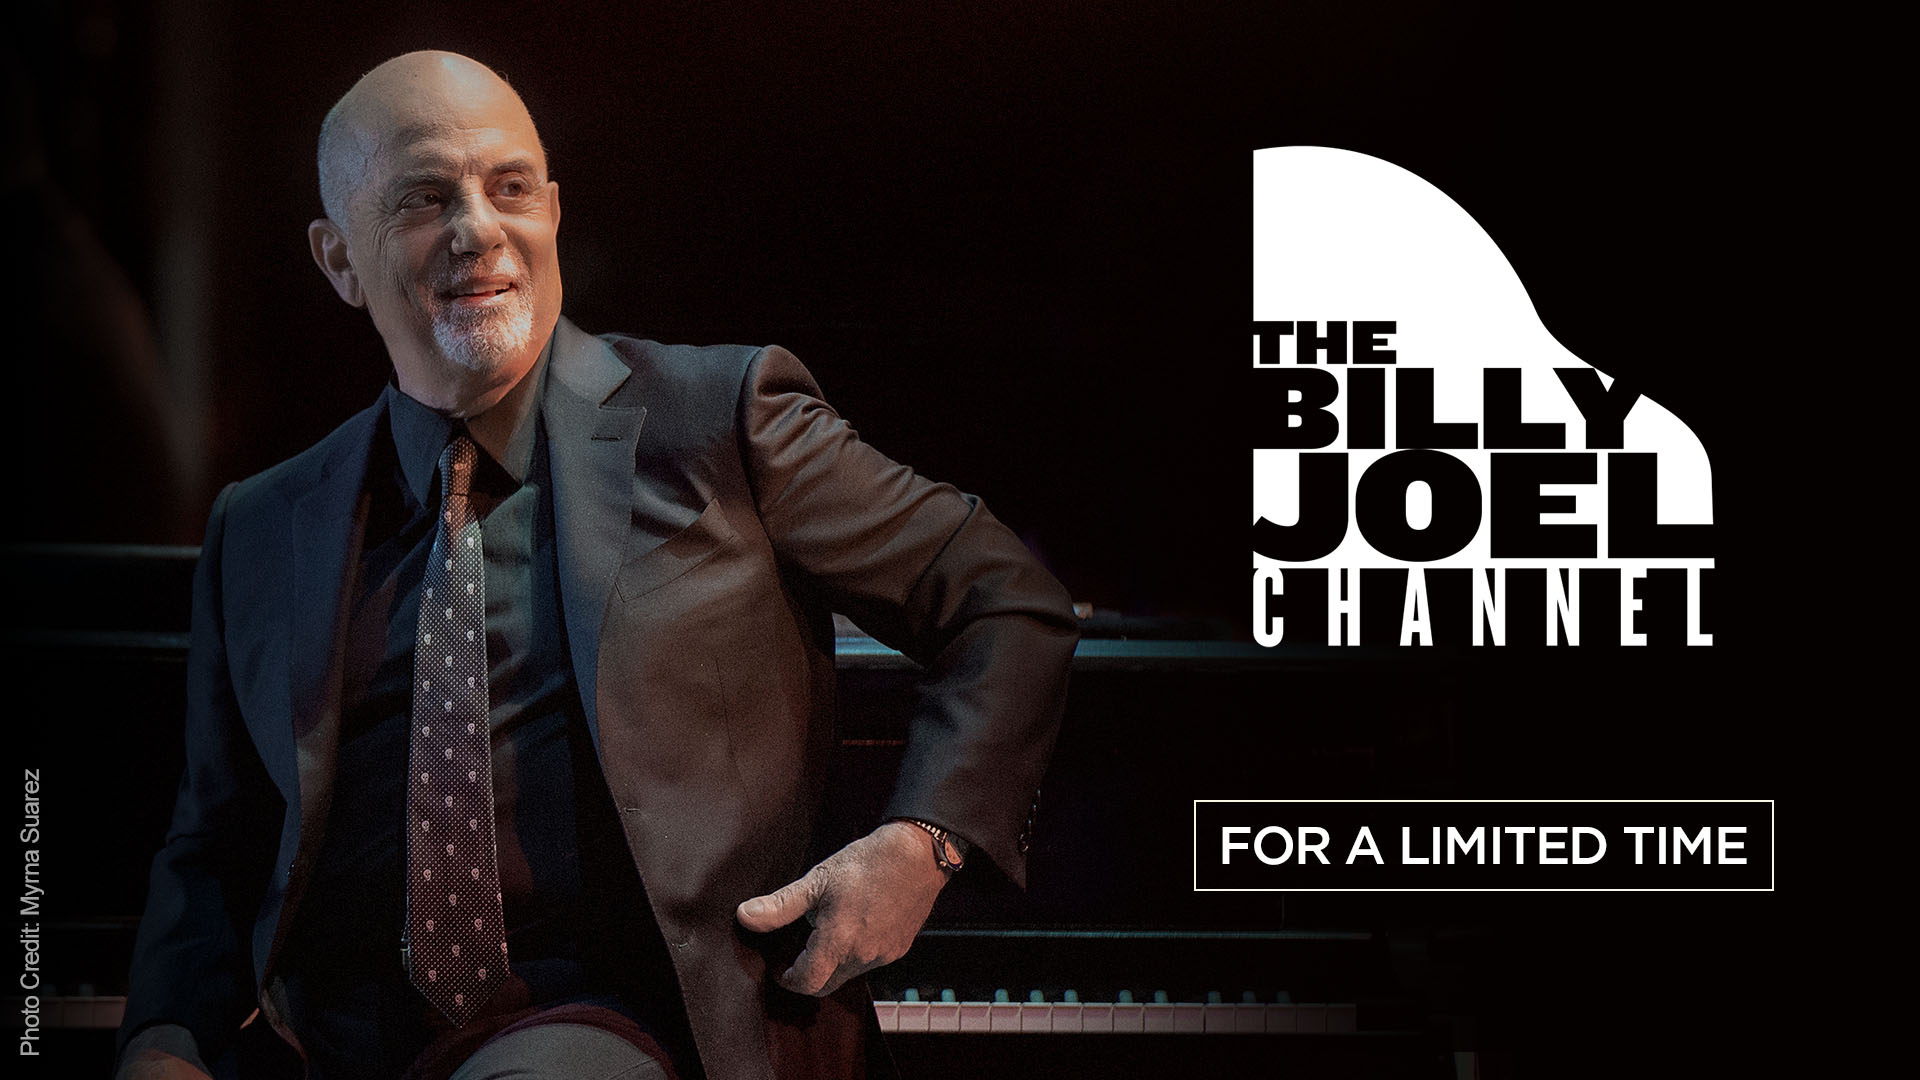 The Billy Joel Channel on SiriusXM